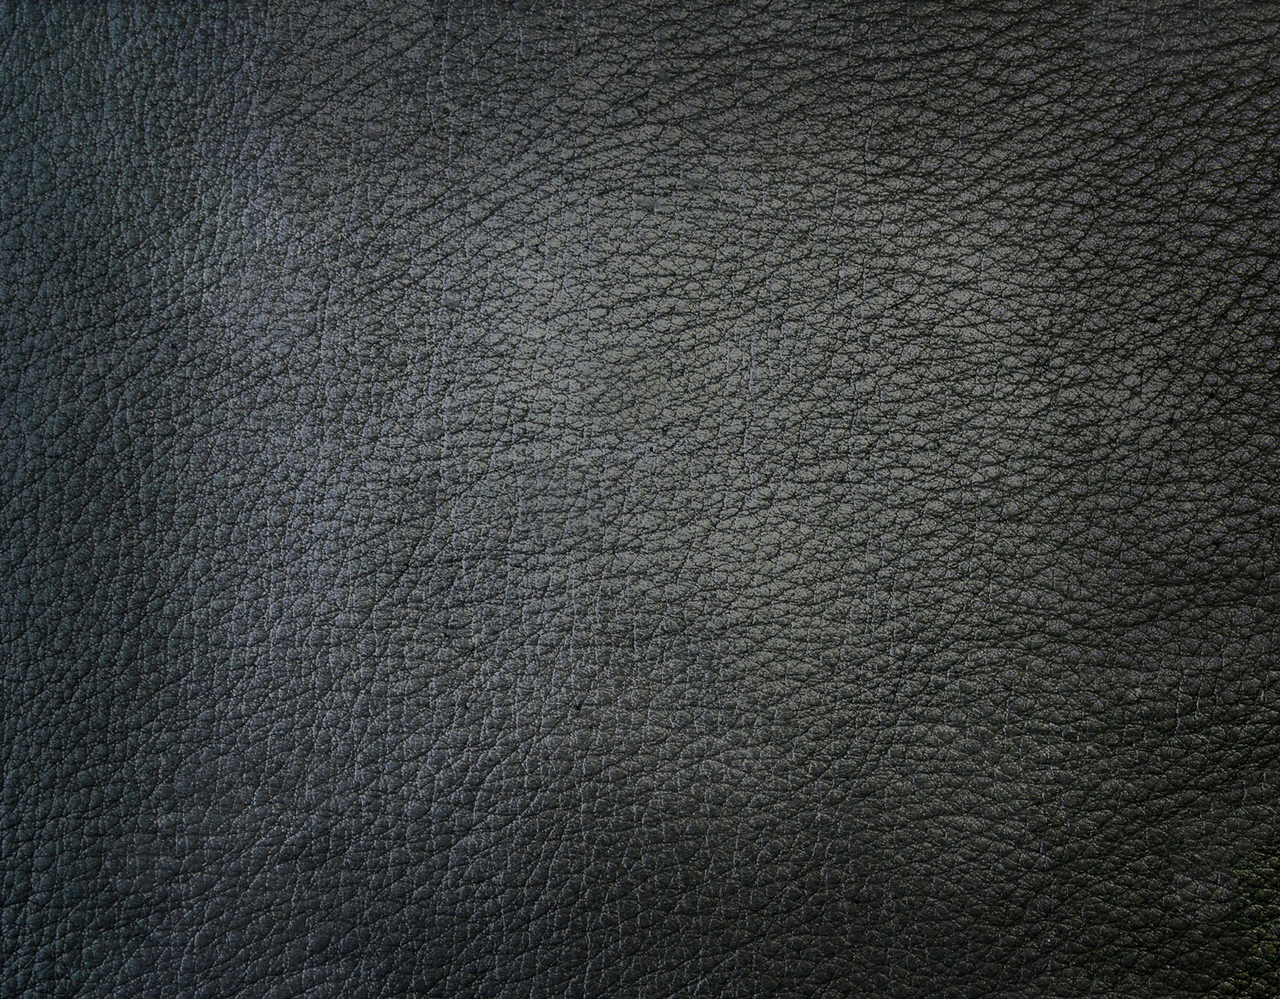 Black Leather Wallpaper By Mkadriovski On Deviantart HD Wallpapers Download Free Images Wallpaper [wallpaper981.blogspot.com]